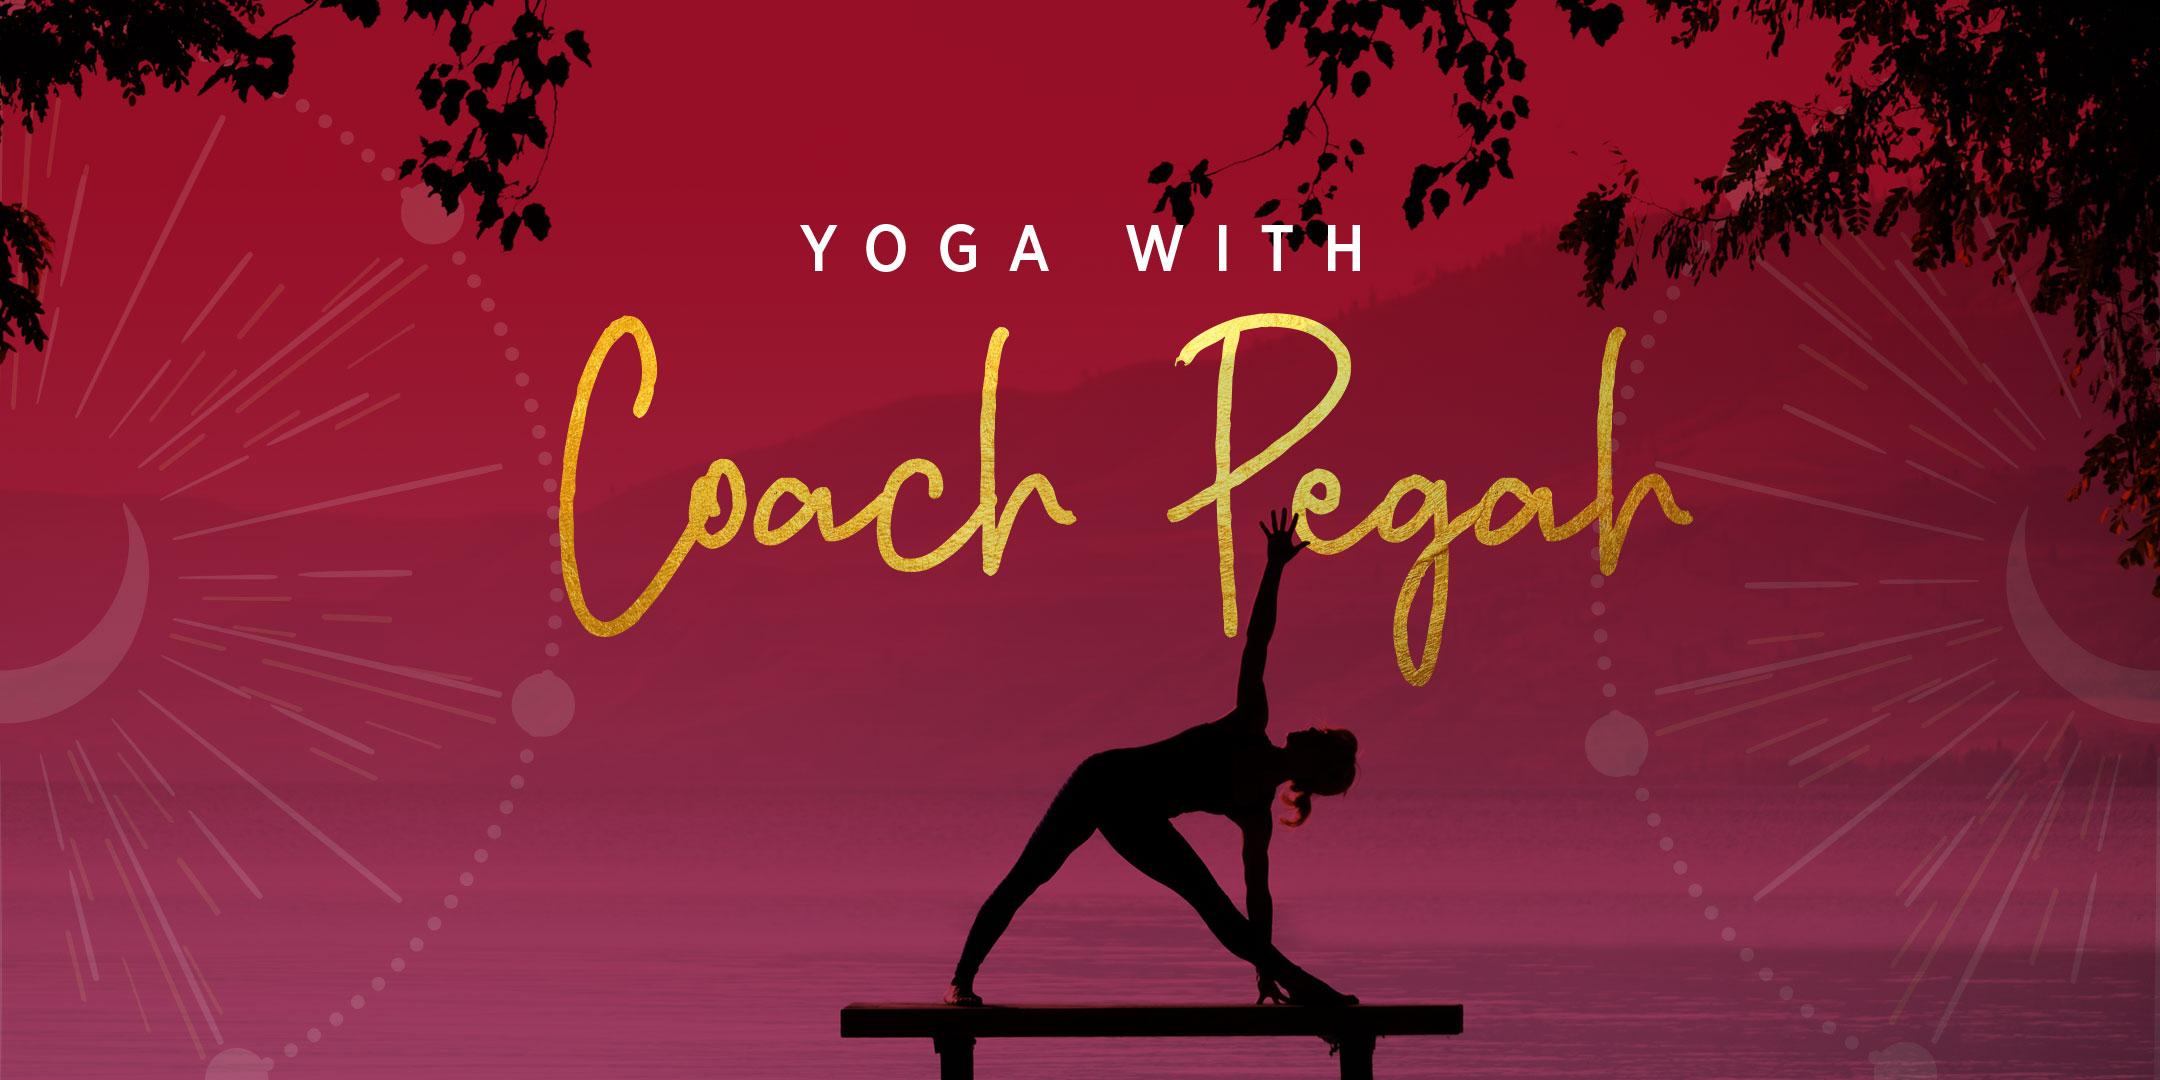 Yoga with Coach Pegah